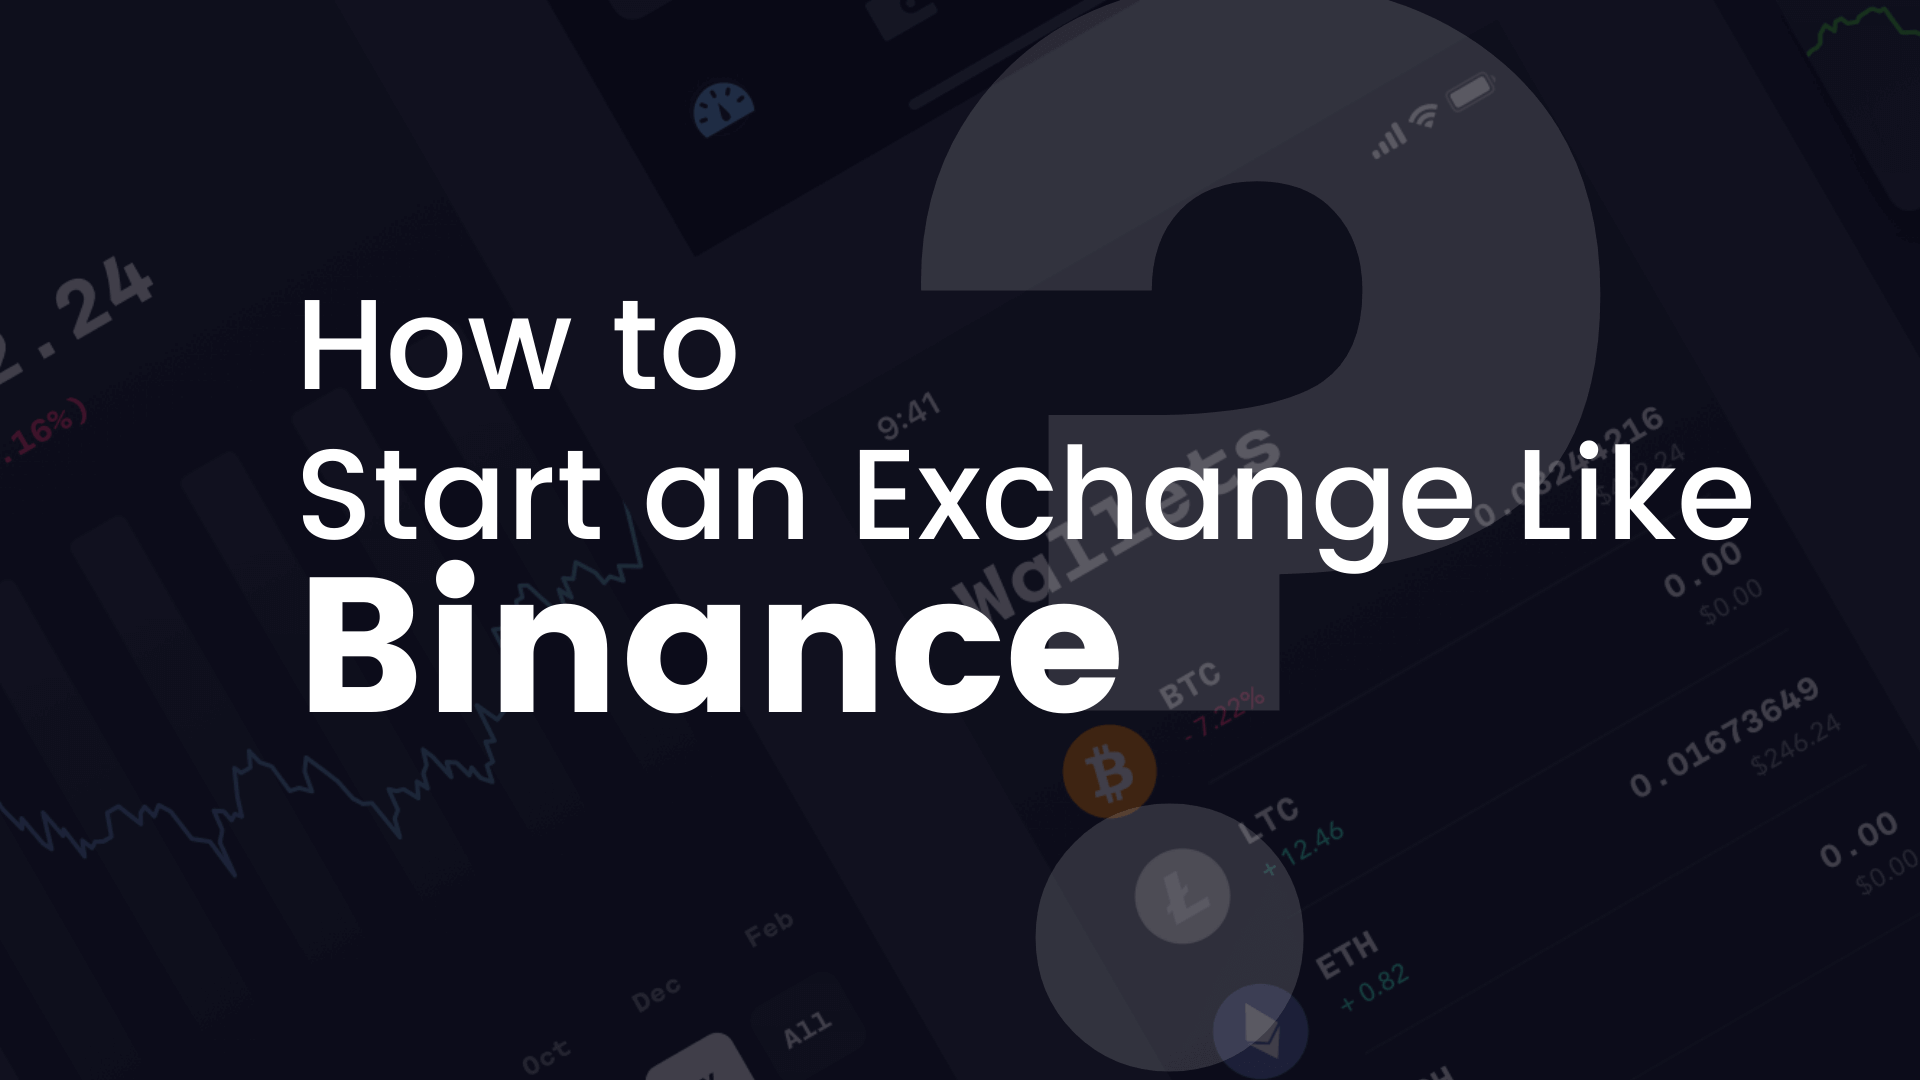 How To Start an Exchange Like Binance?